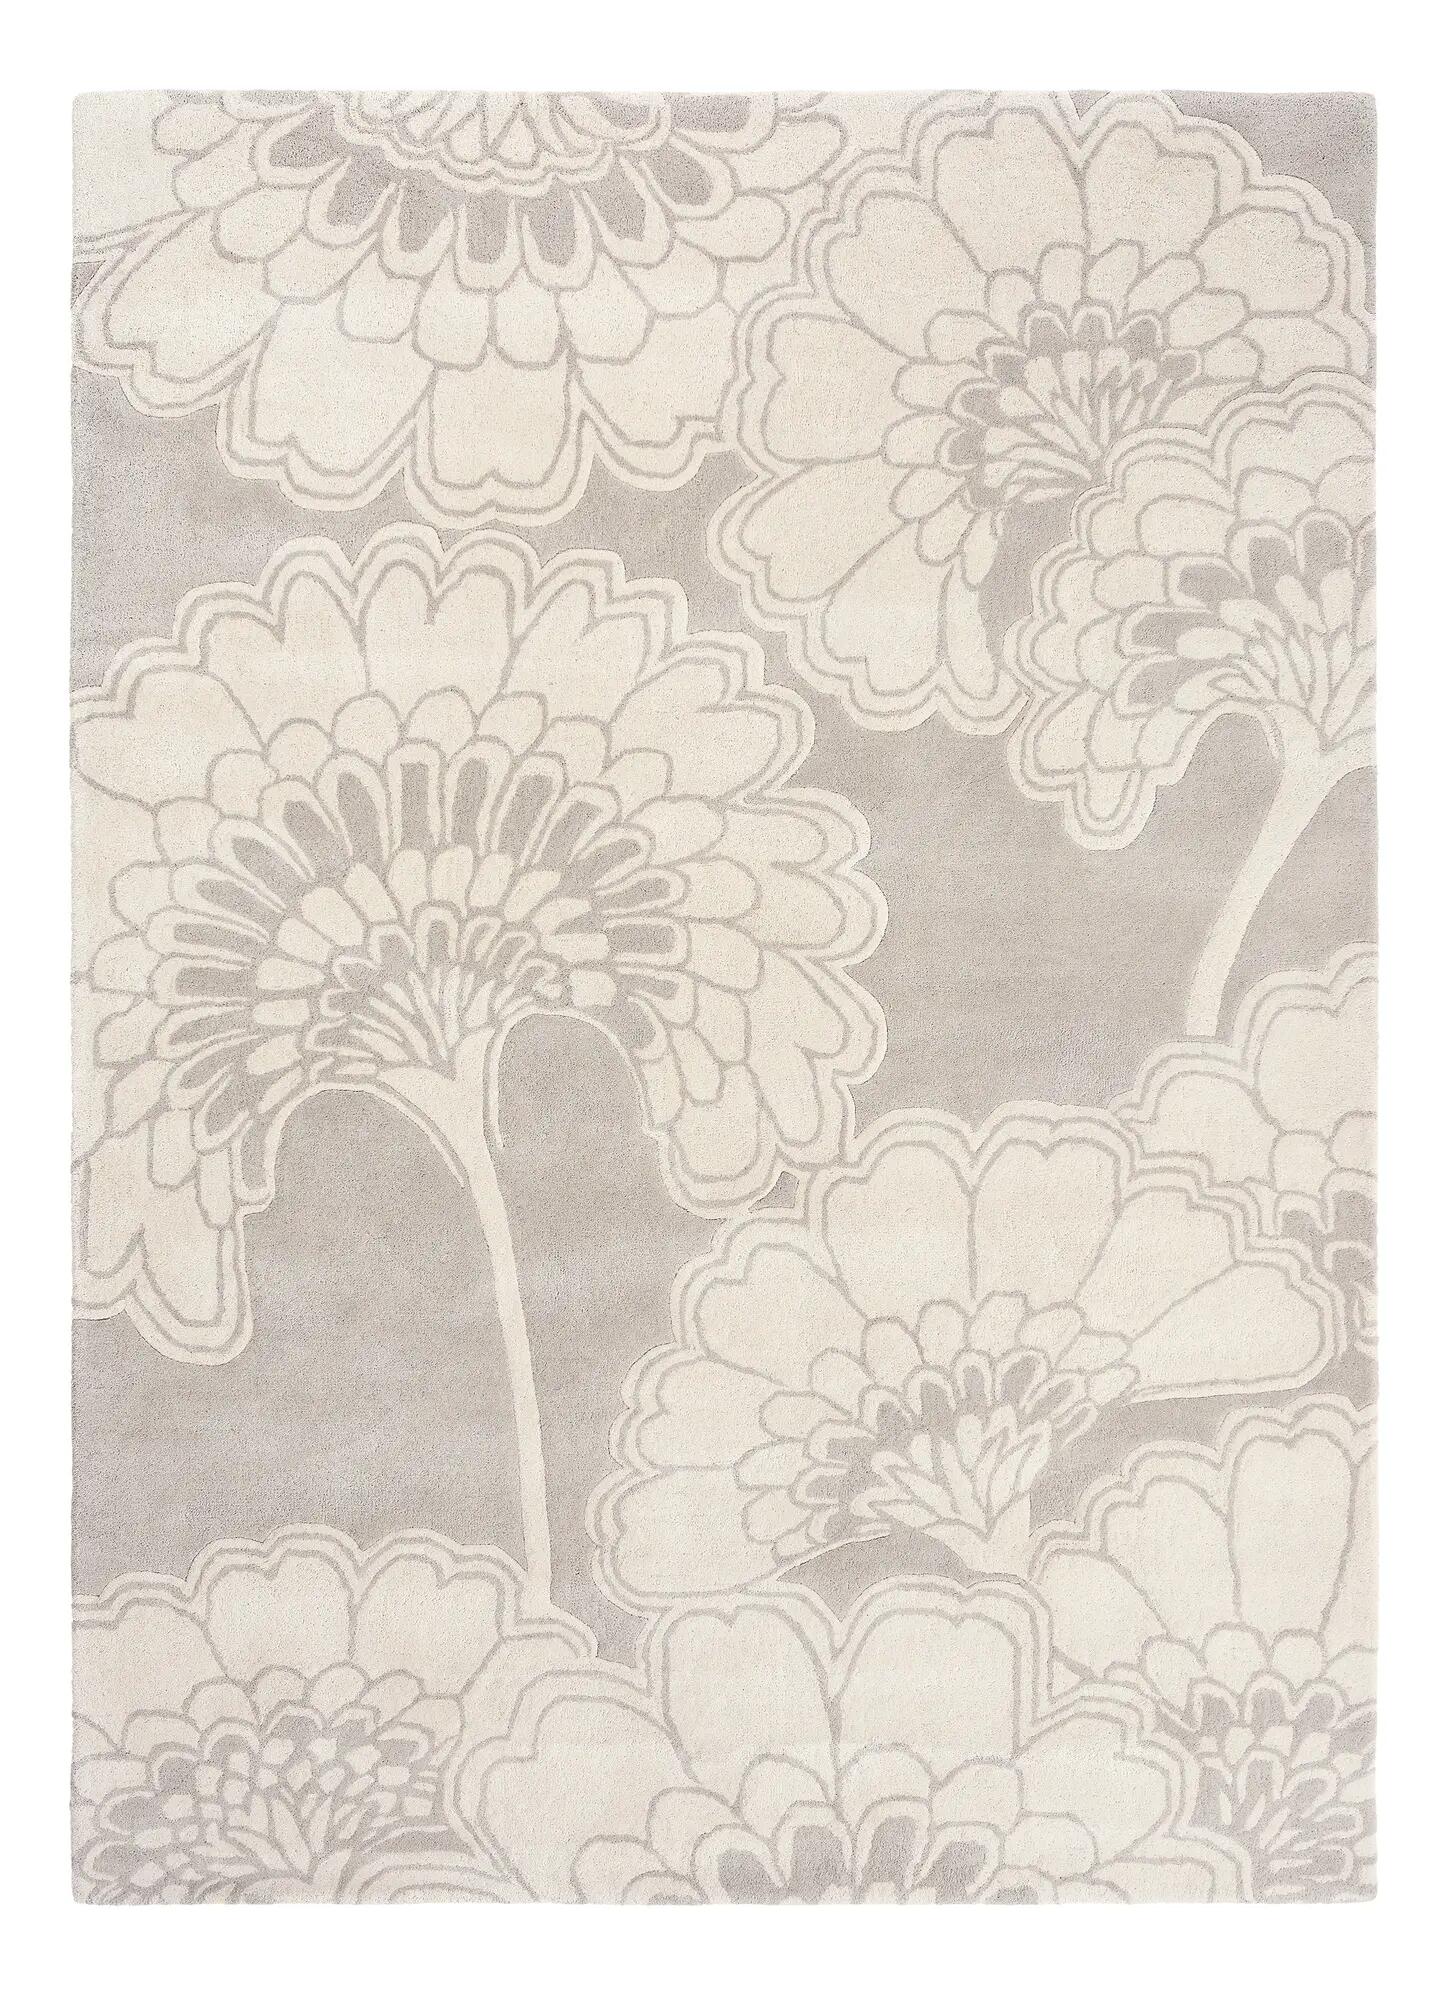 Alfombra lana florence broadhurtst japan -oy 39701 120x180cm